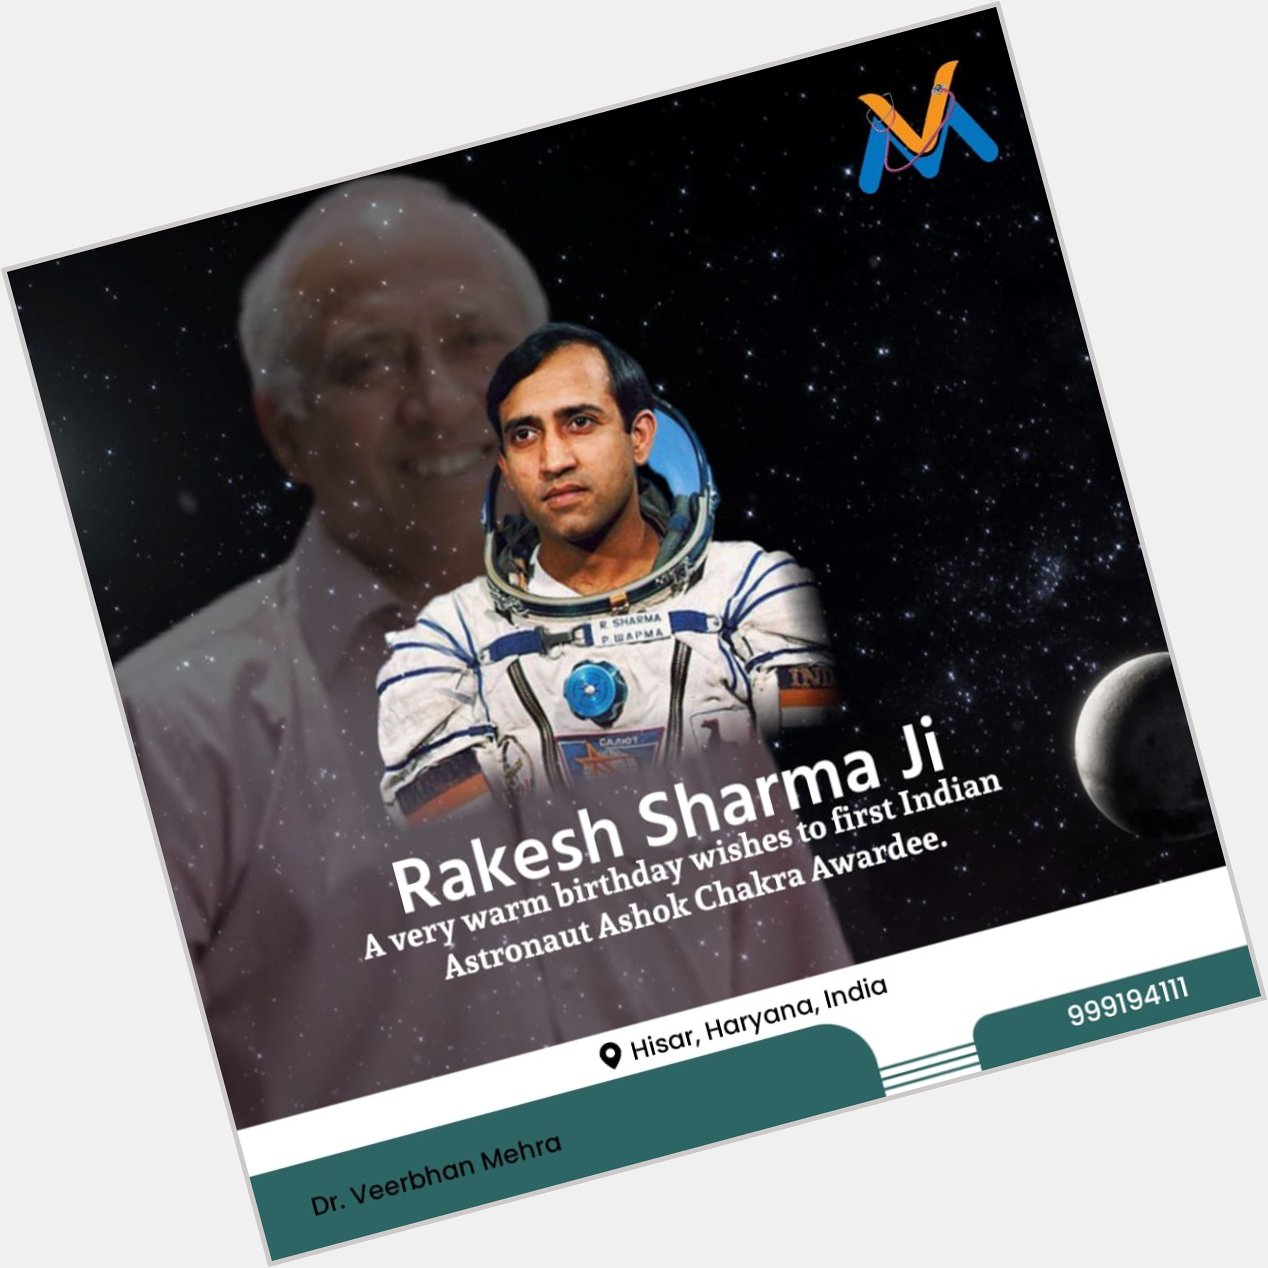 Happy Birthday to first Indian astronaut, Sri Rakesh Sharma Ji!   